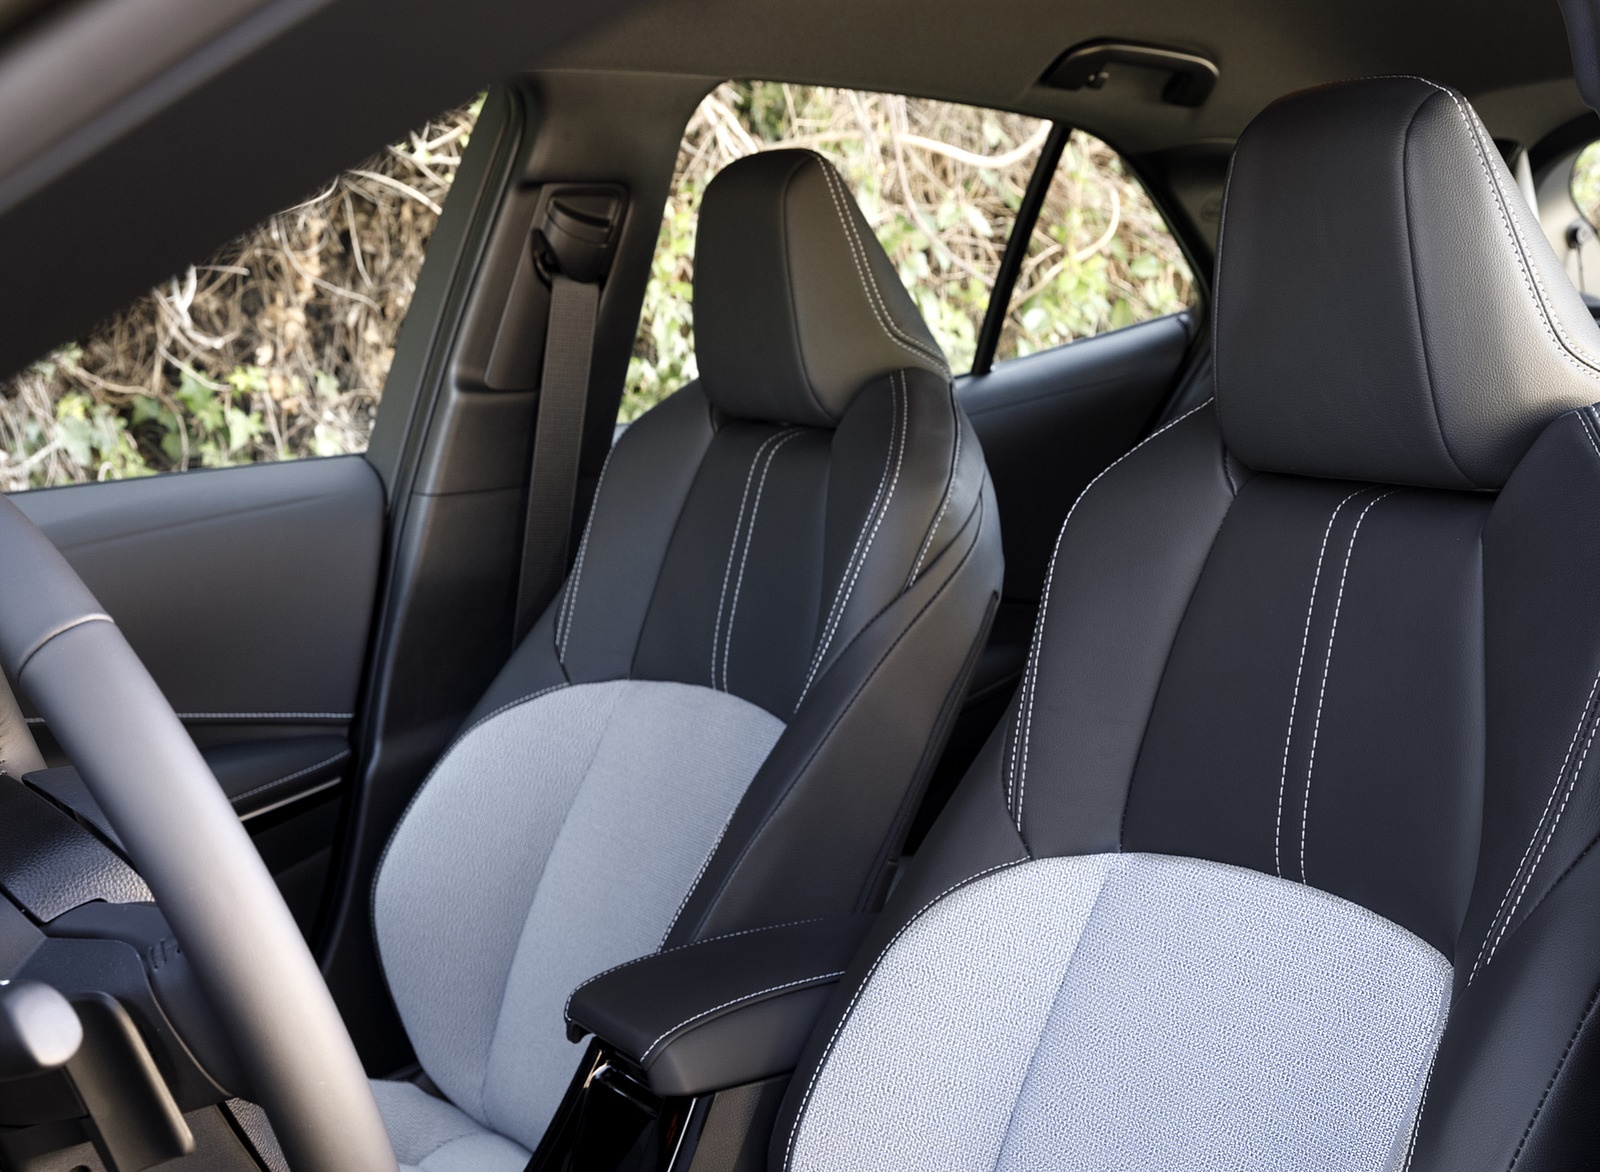 2019 Toyota Corolla Hatchback Interior Seats Wallpapers #67 of 75